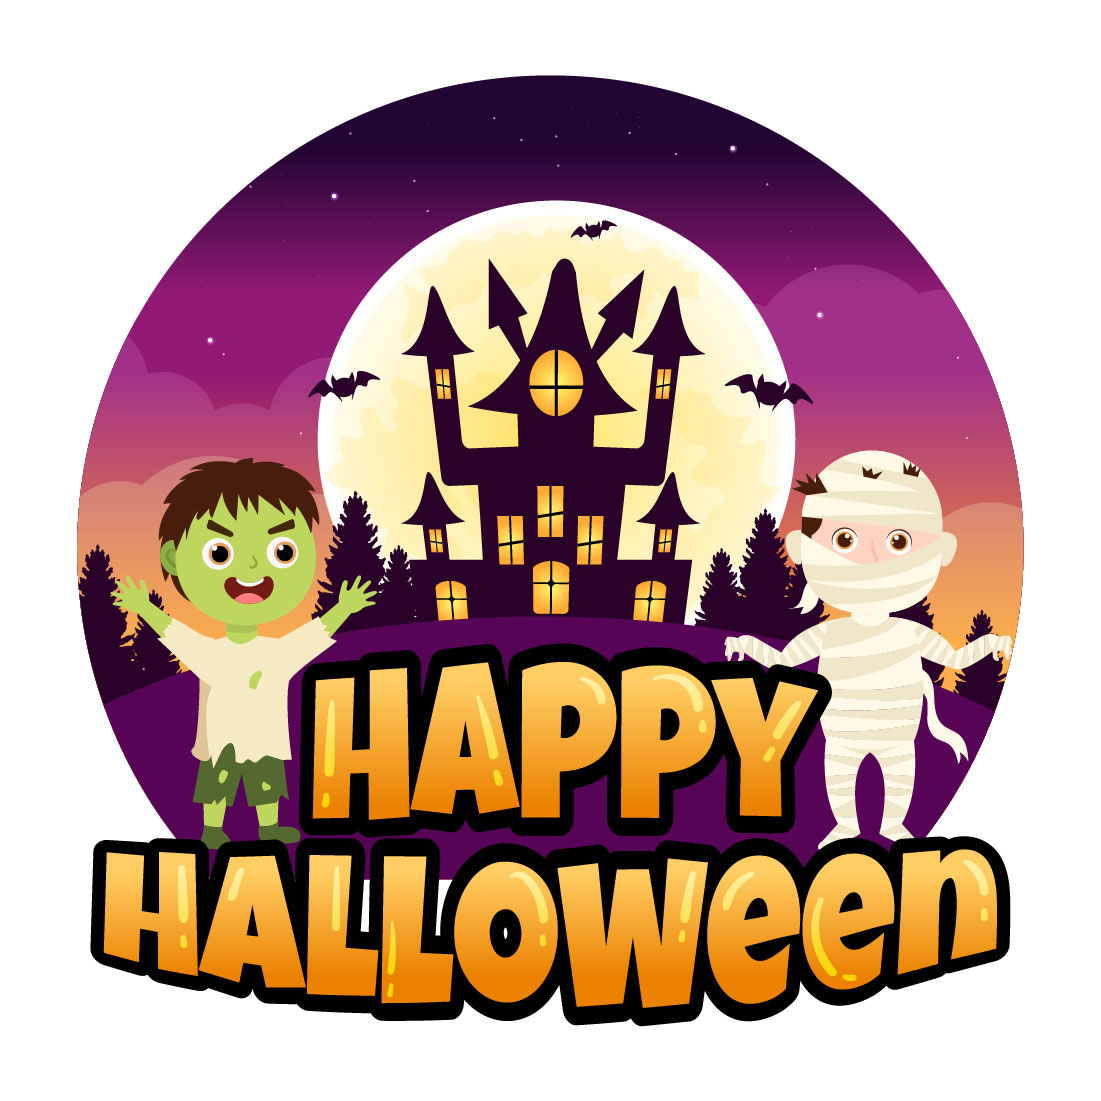 20 Happy Halloween Illustration Cover Image.